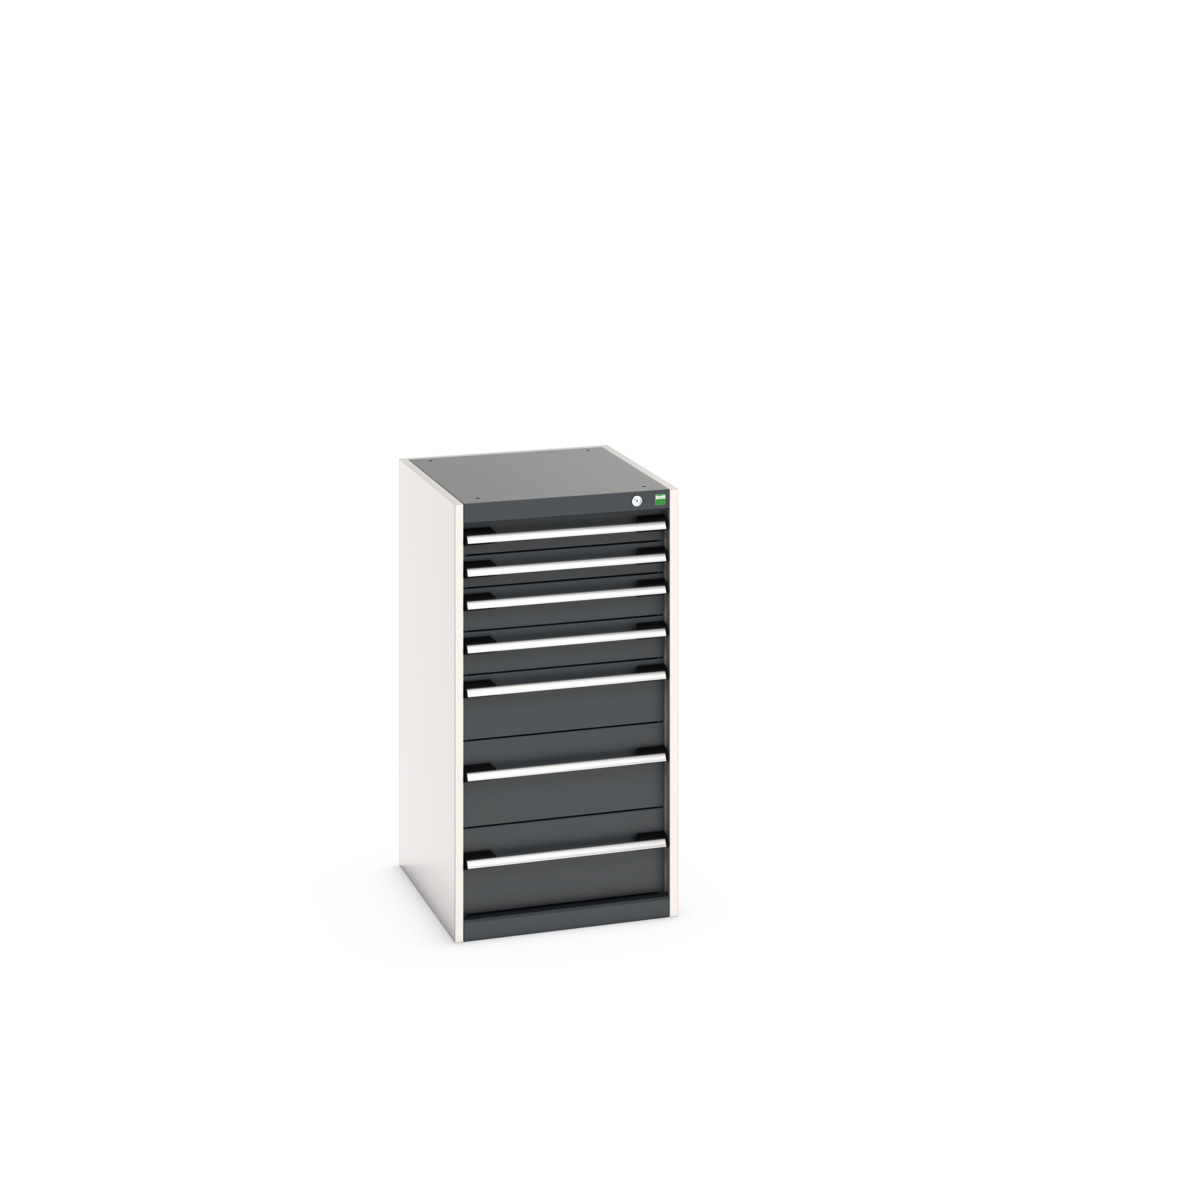 40018061. - cubio drawer cabinet